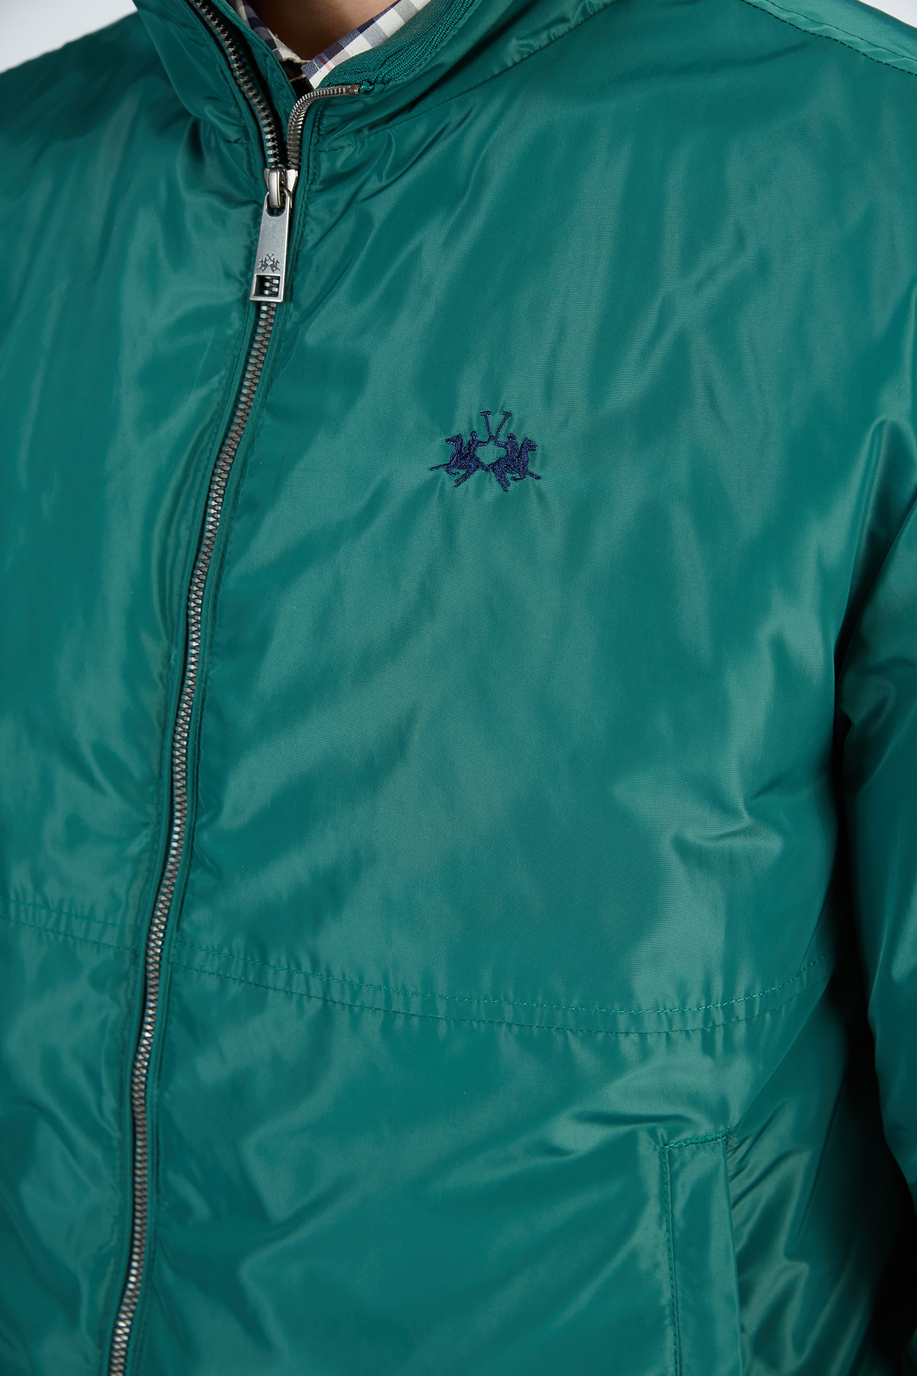 Men’s jacket in nylon regular fit model - Outdoor | La Martina - Official Online Shop